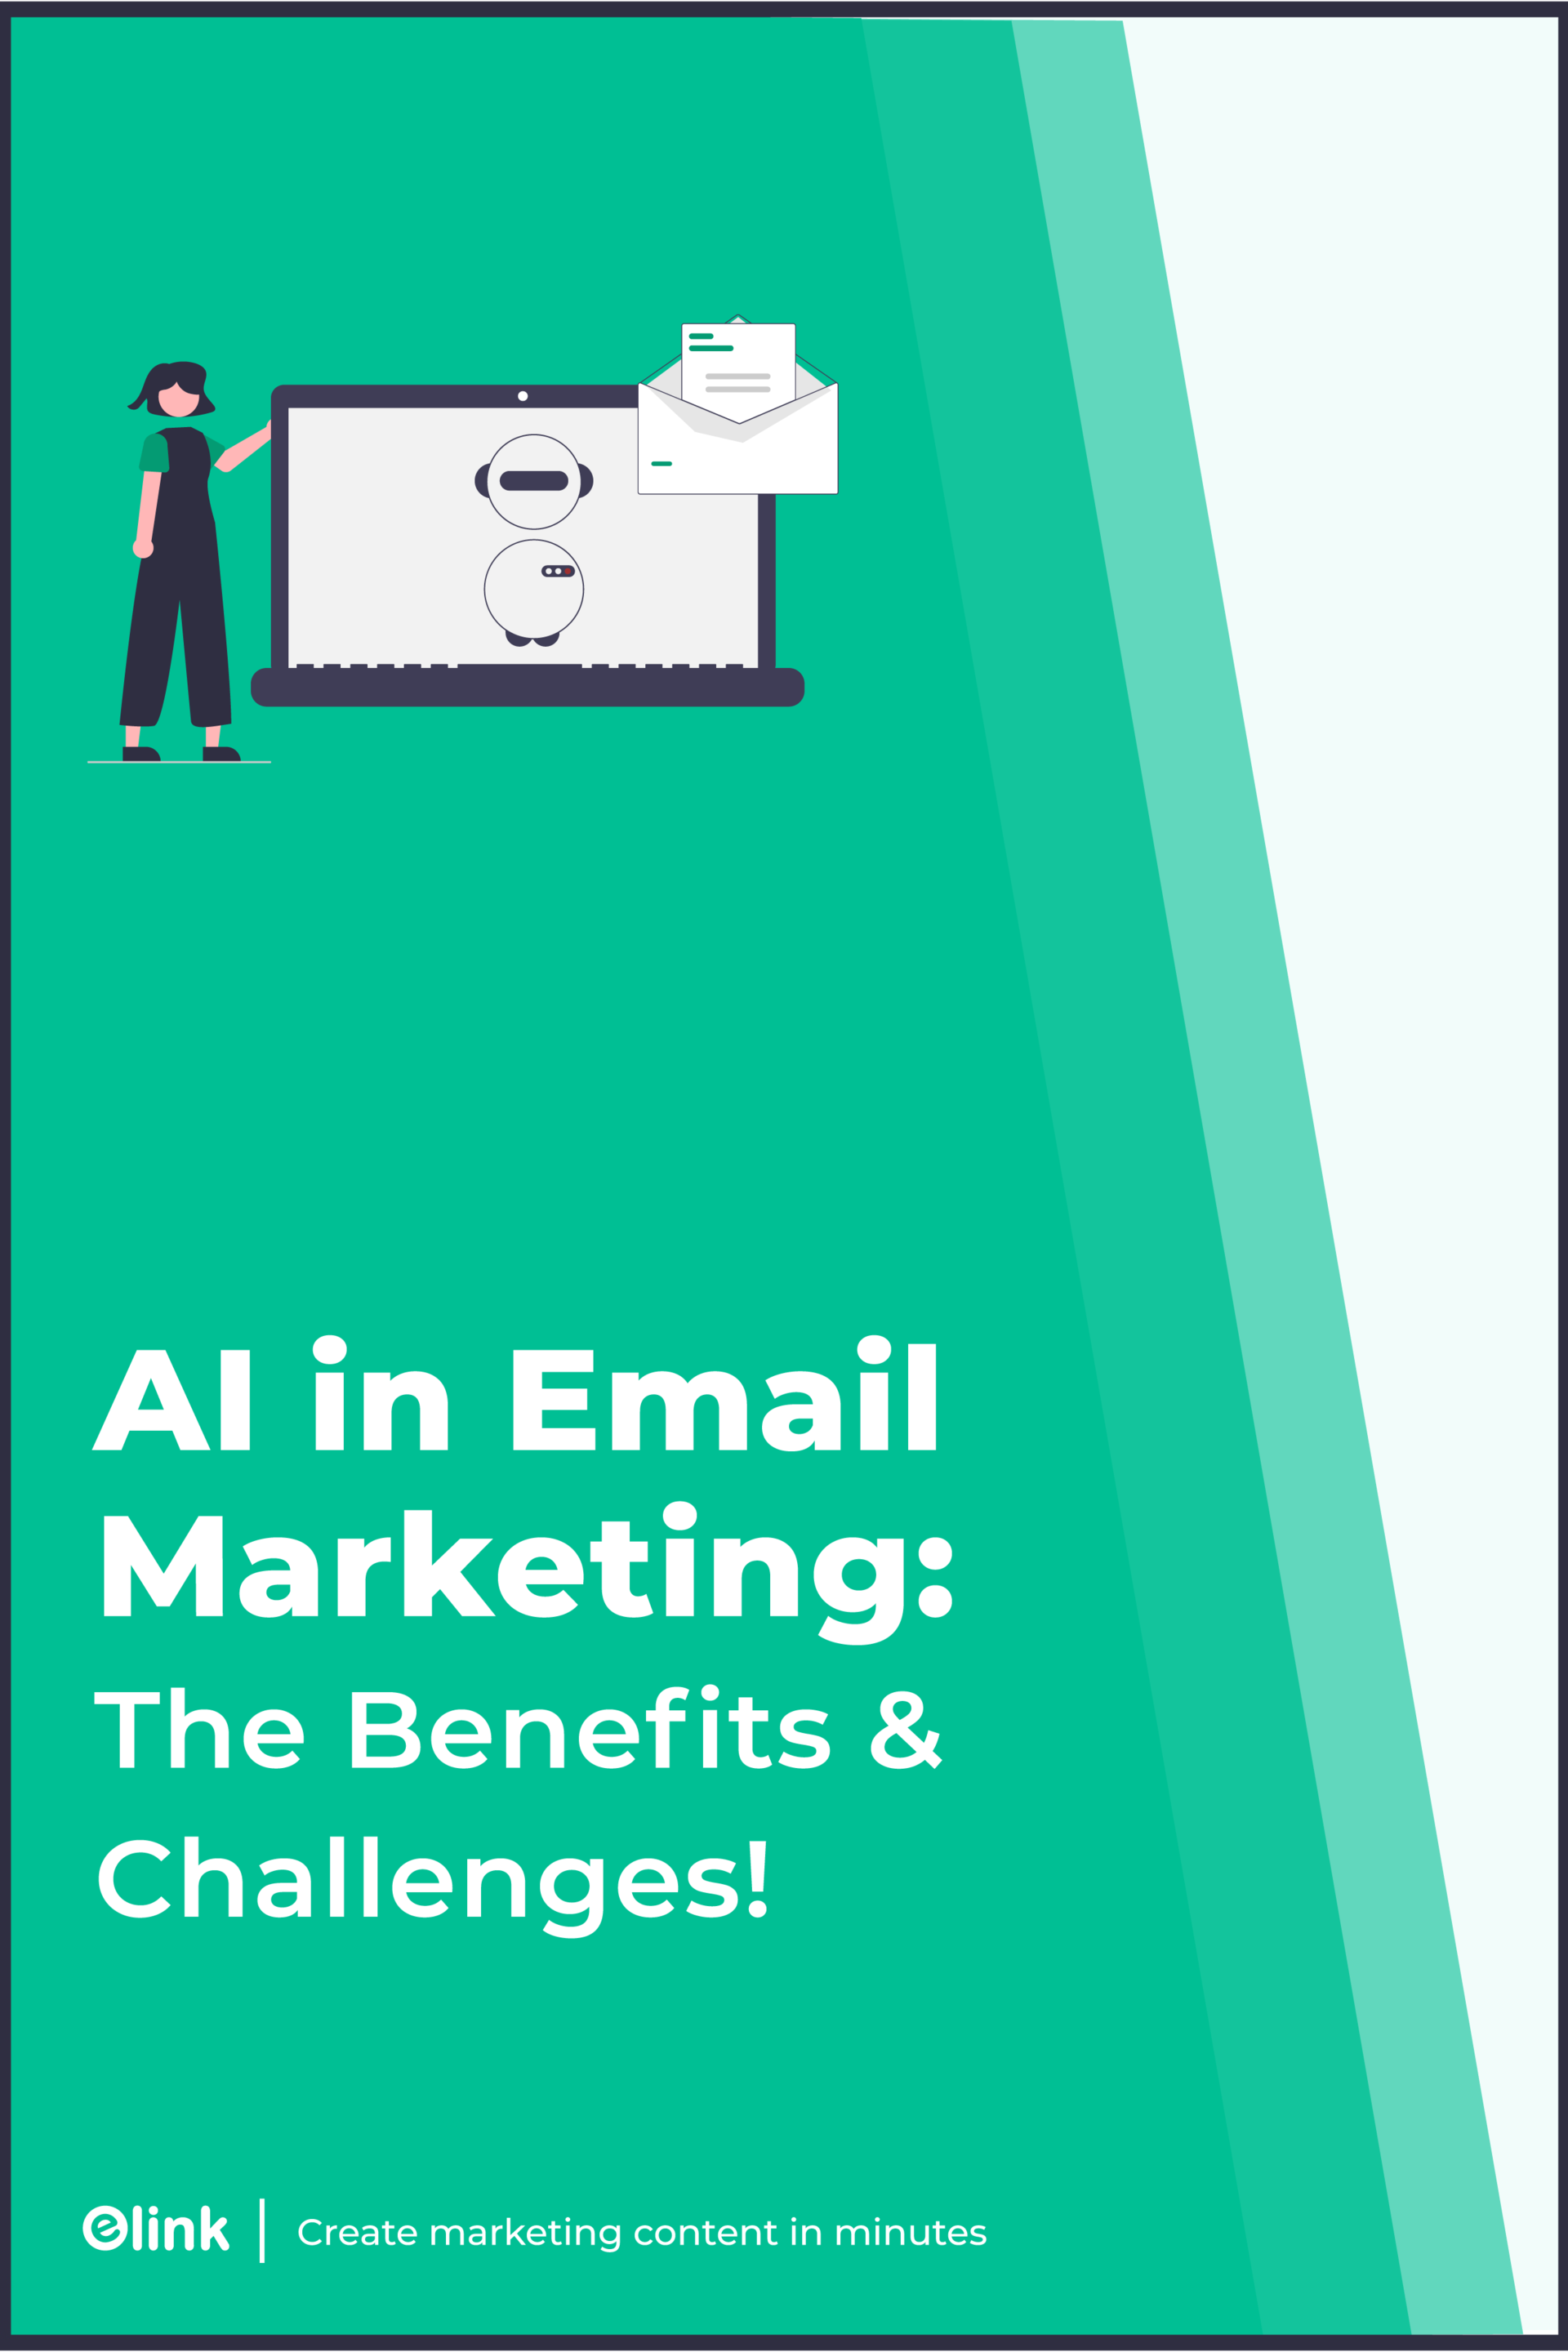 IA en banner de interés de marketing por correo electrónico